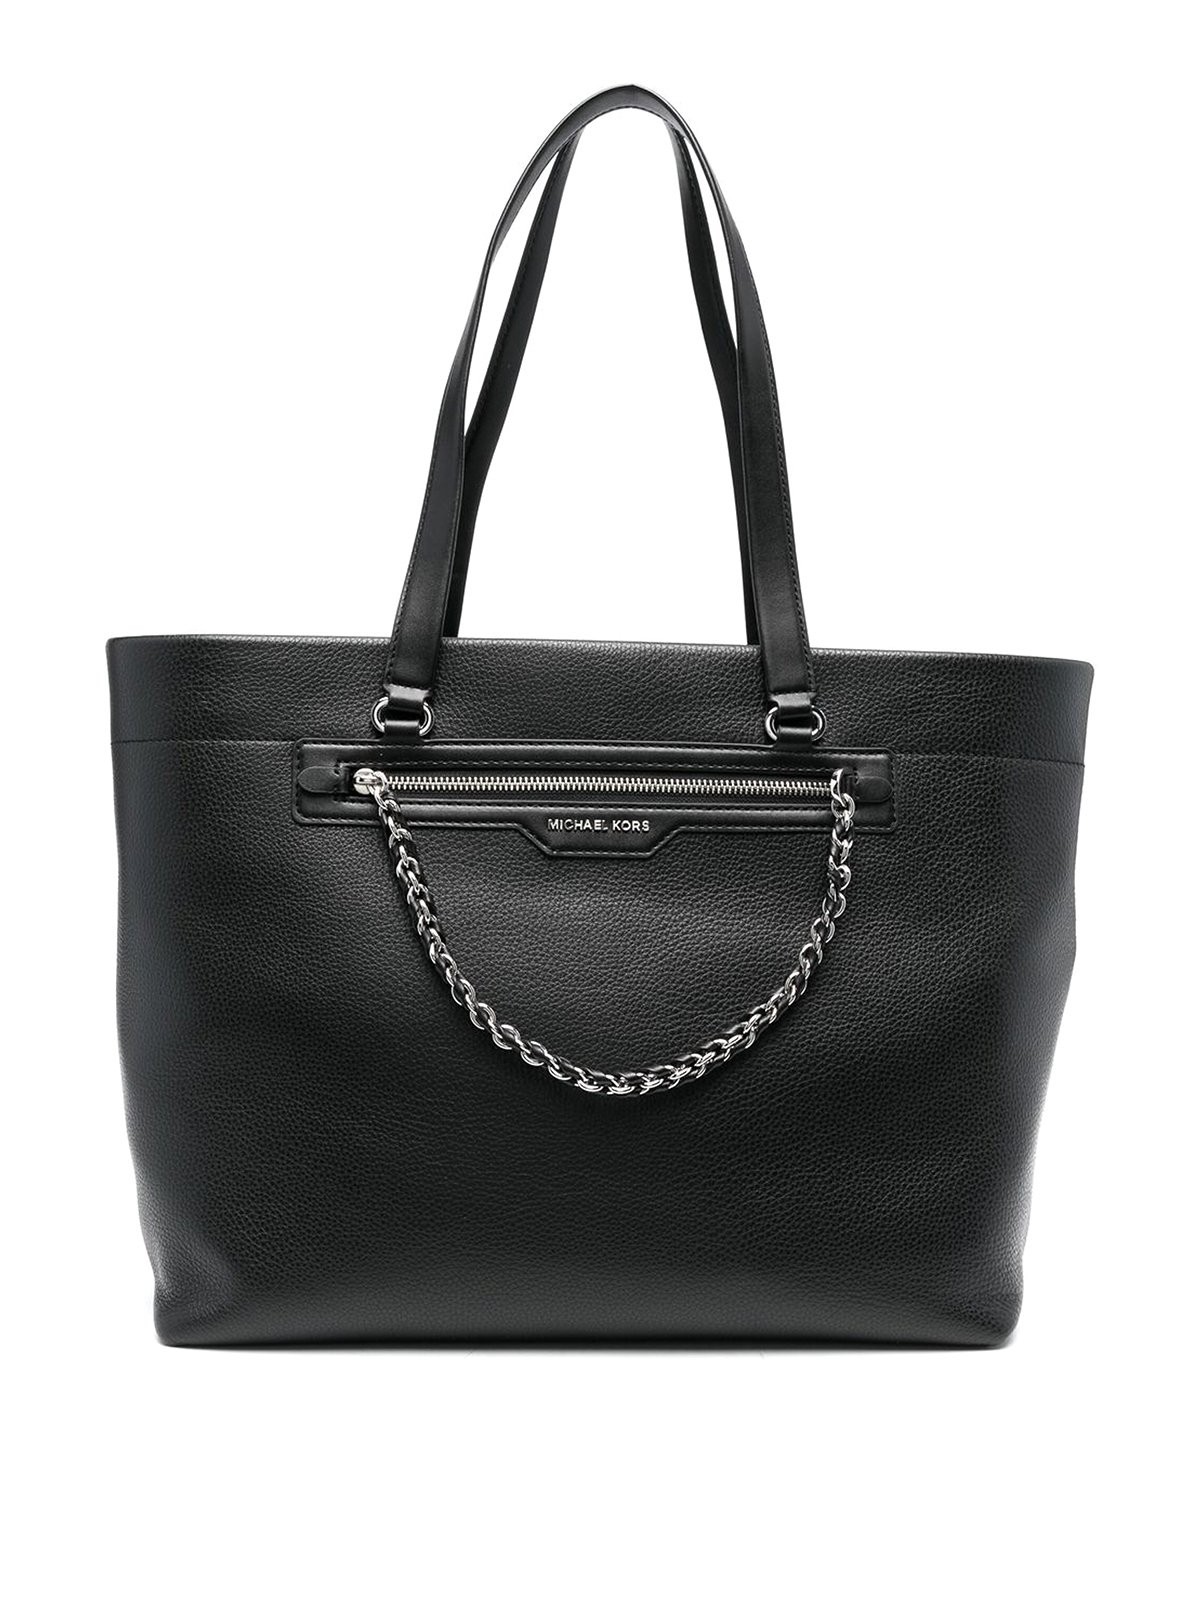 Michael Kors - Women's Elliot Tote Bag - Black - Leather